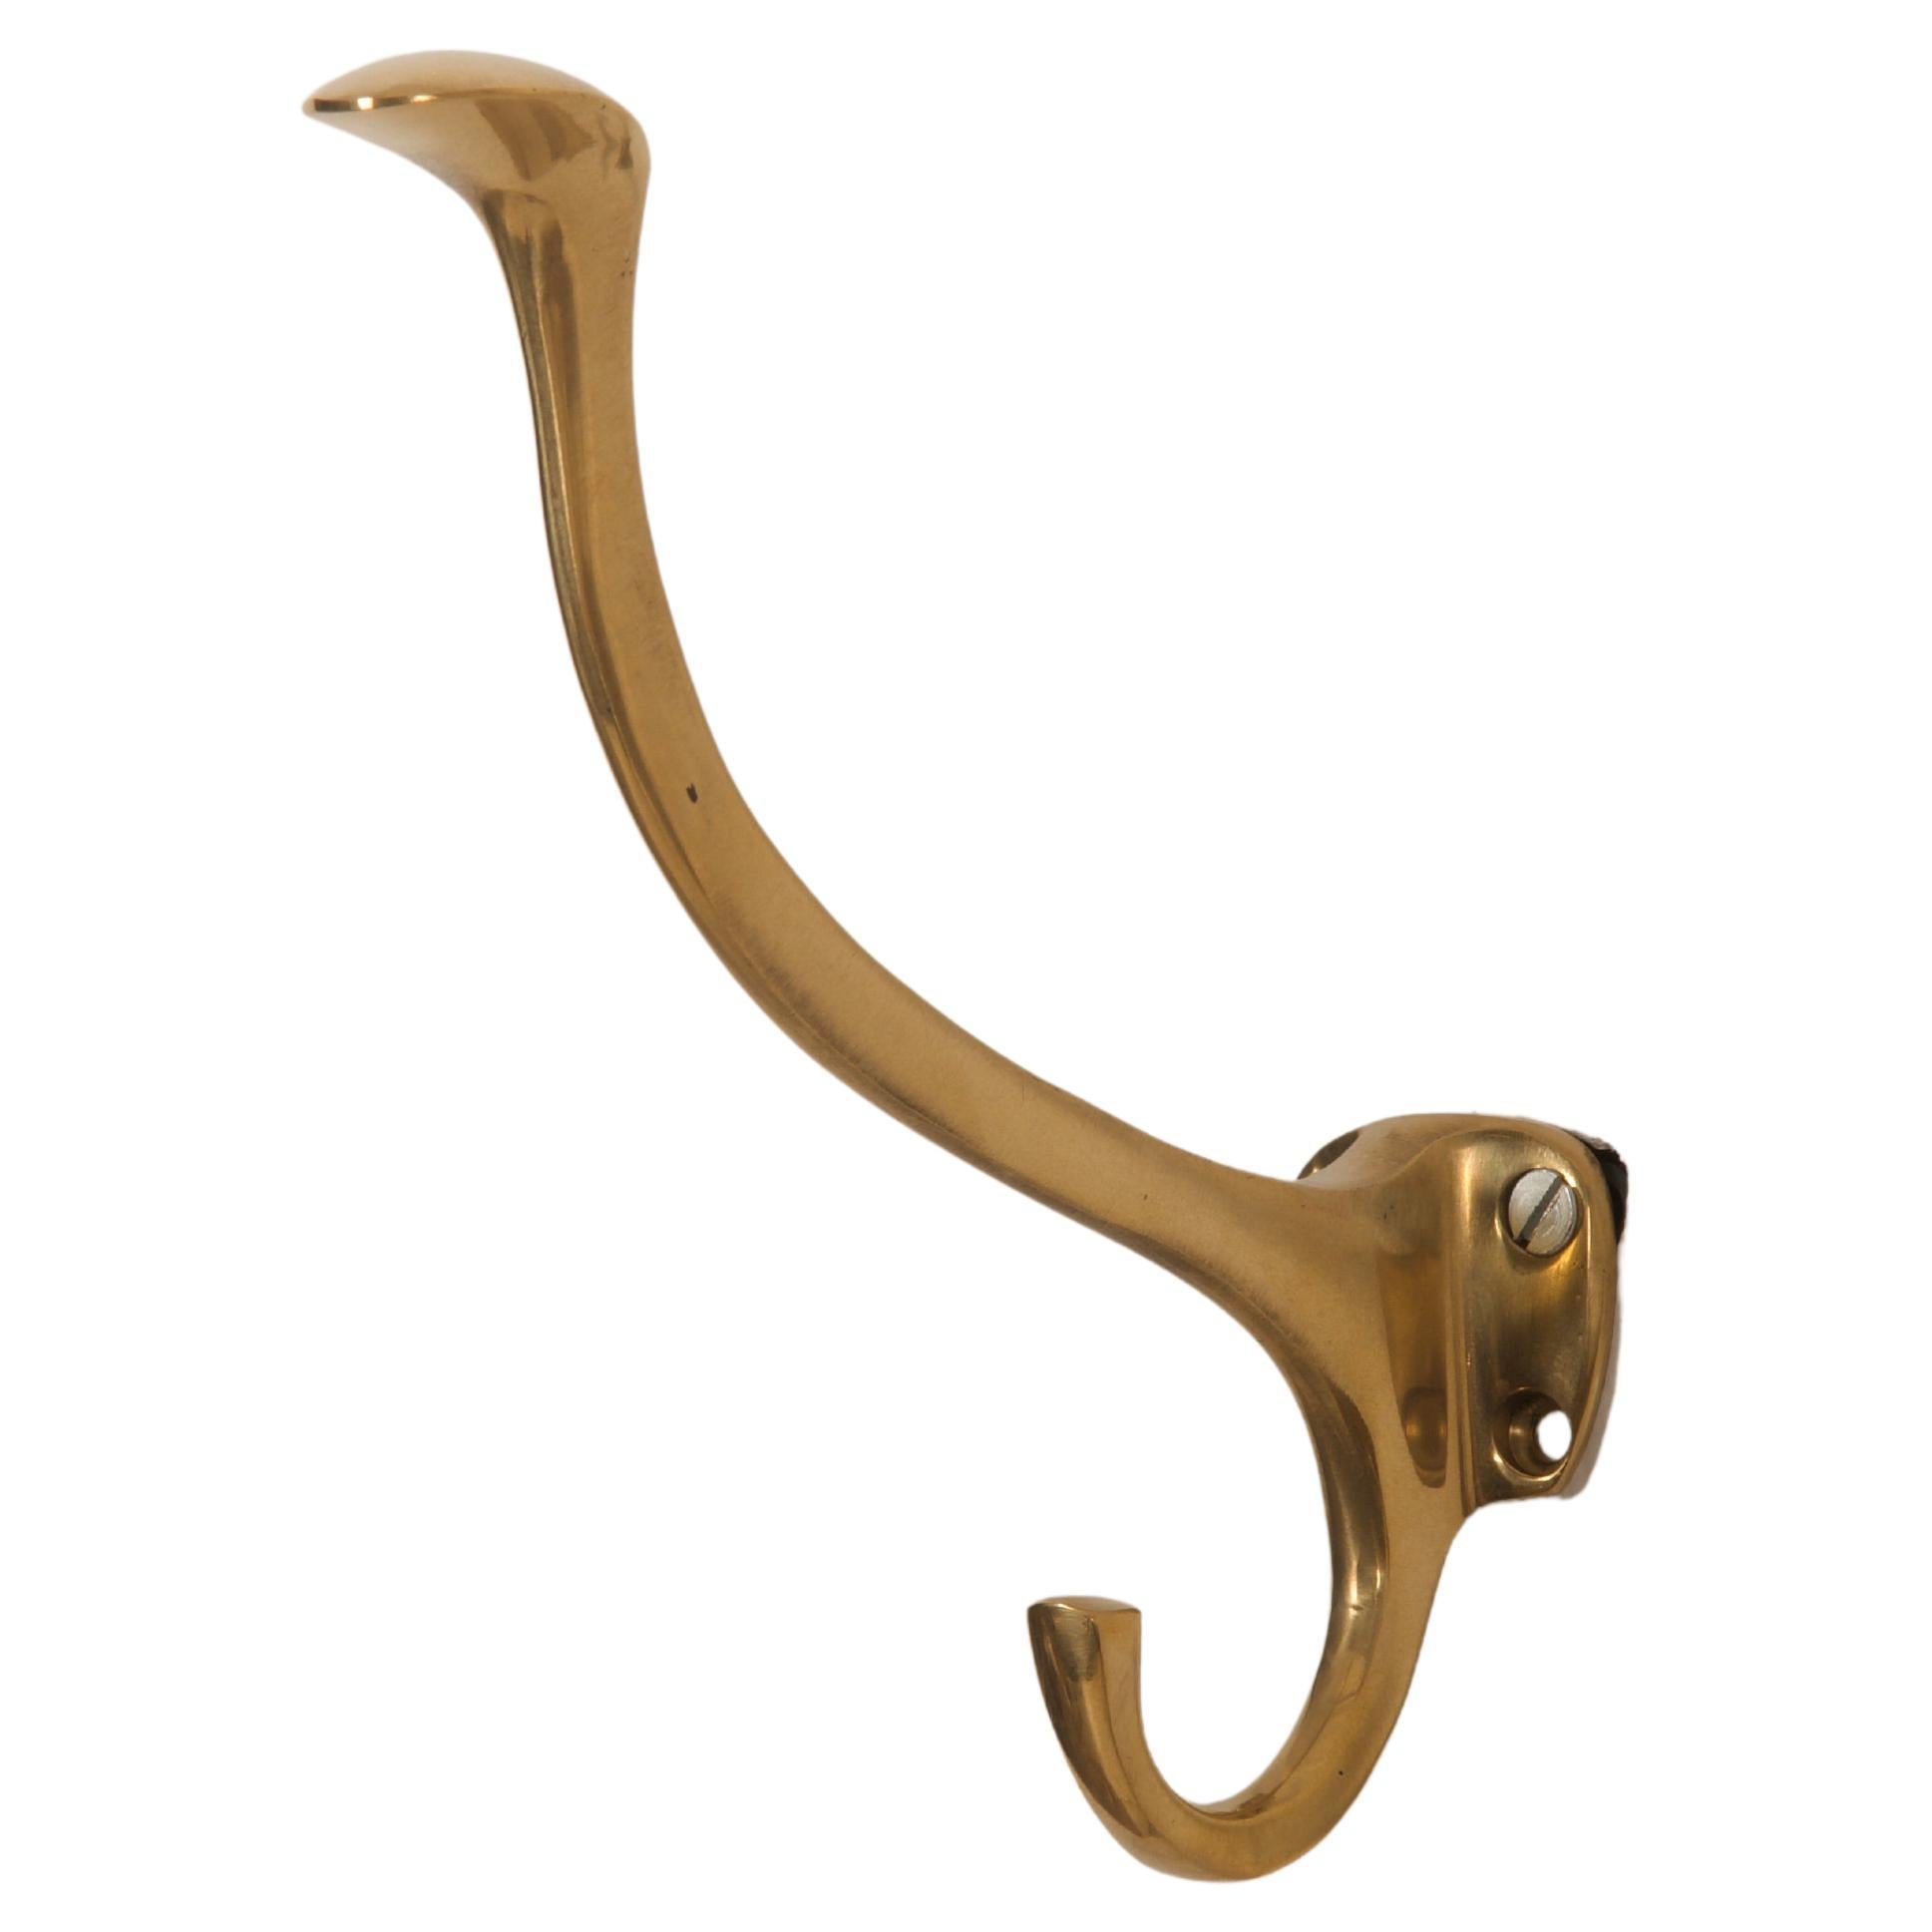 Art Nouveau Brass Coat Hook